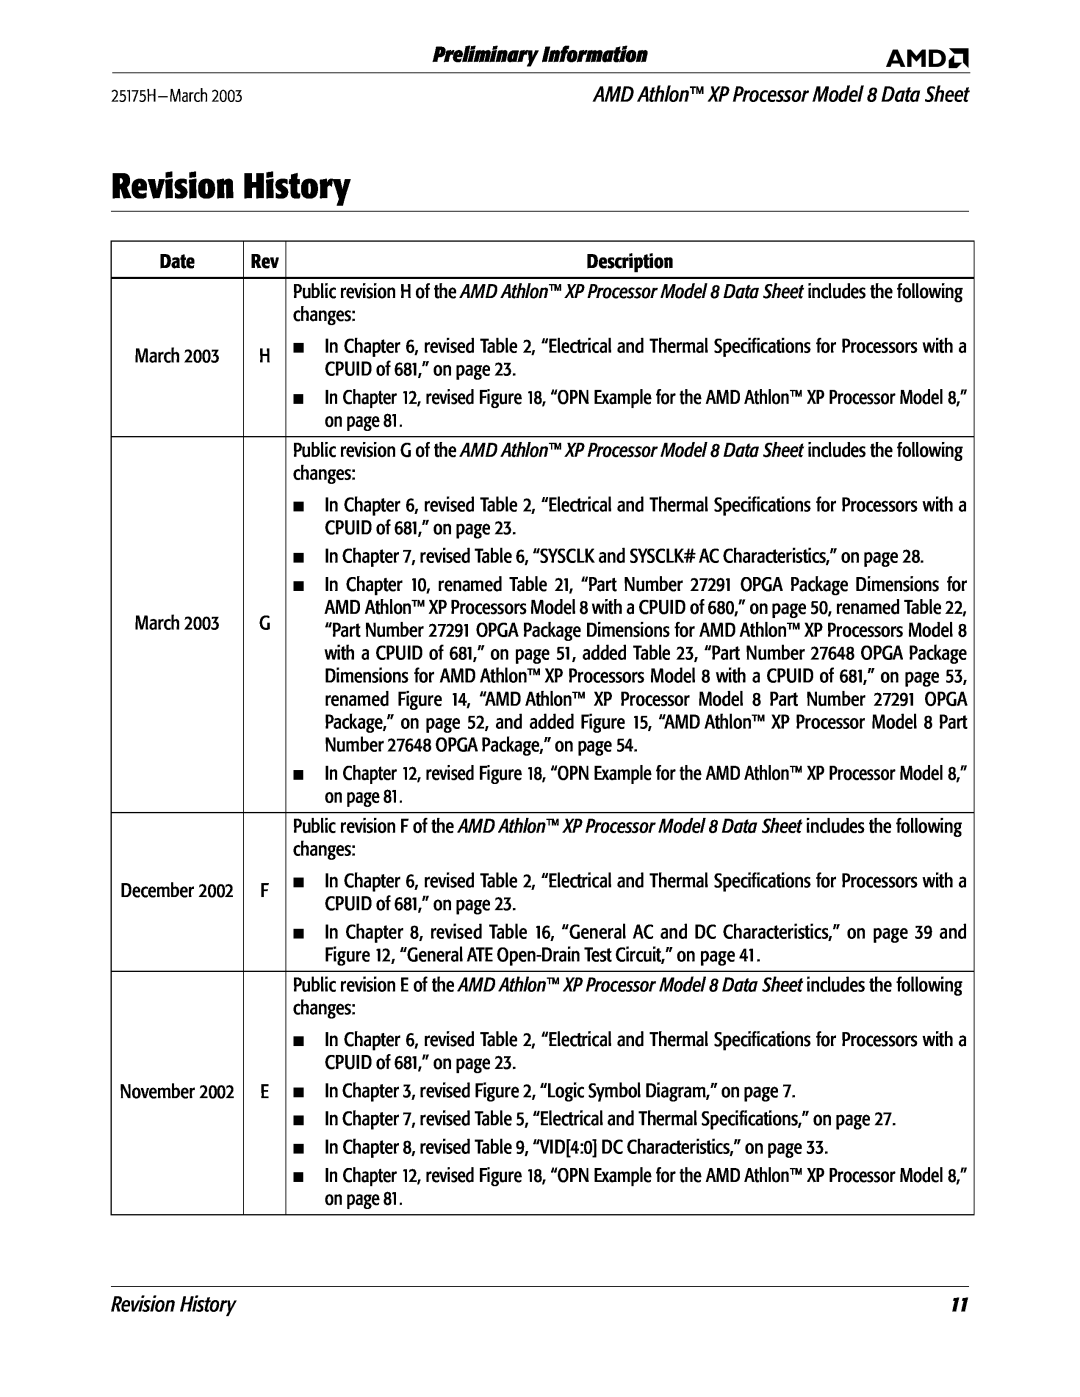 AMD 8 manual Revision History, Preliminary Information 